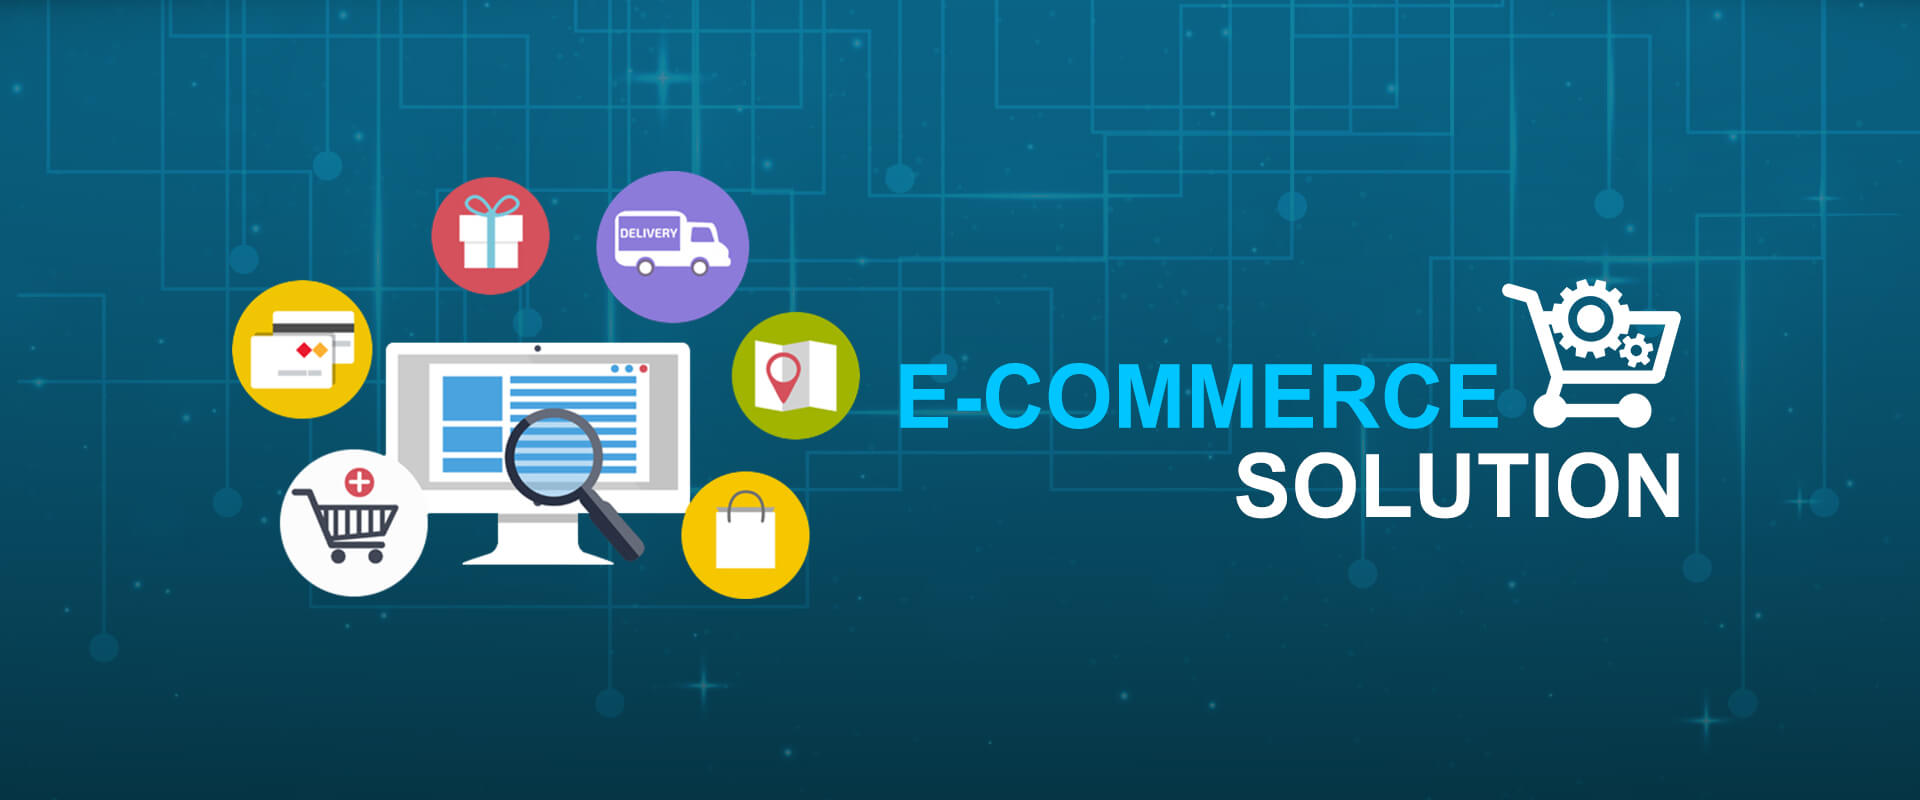 ecommerce-solution-service-idicc